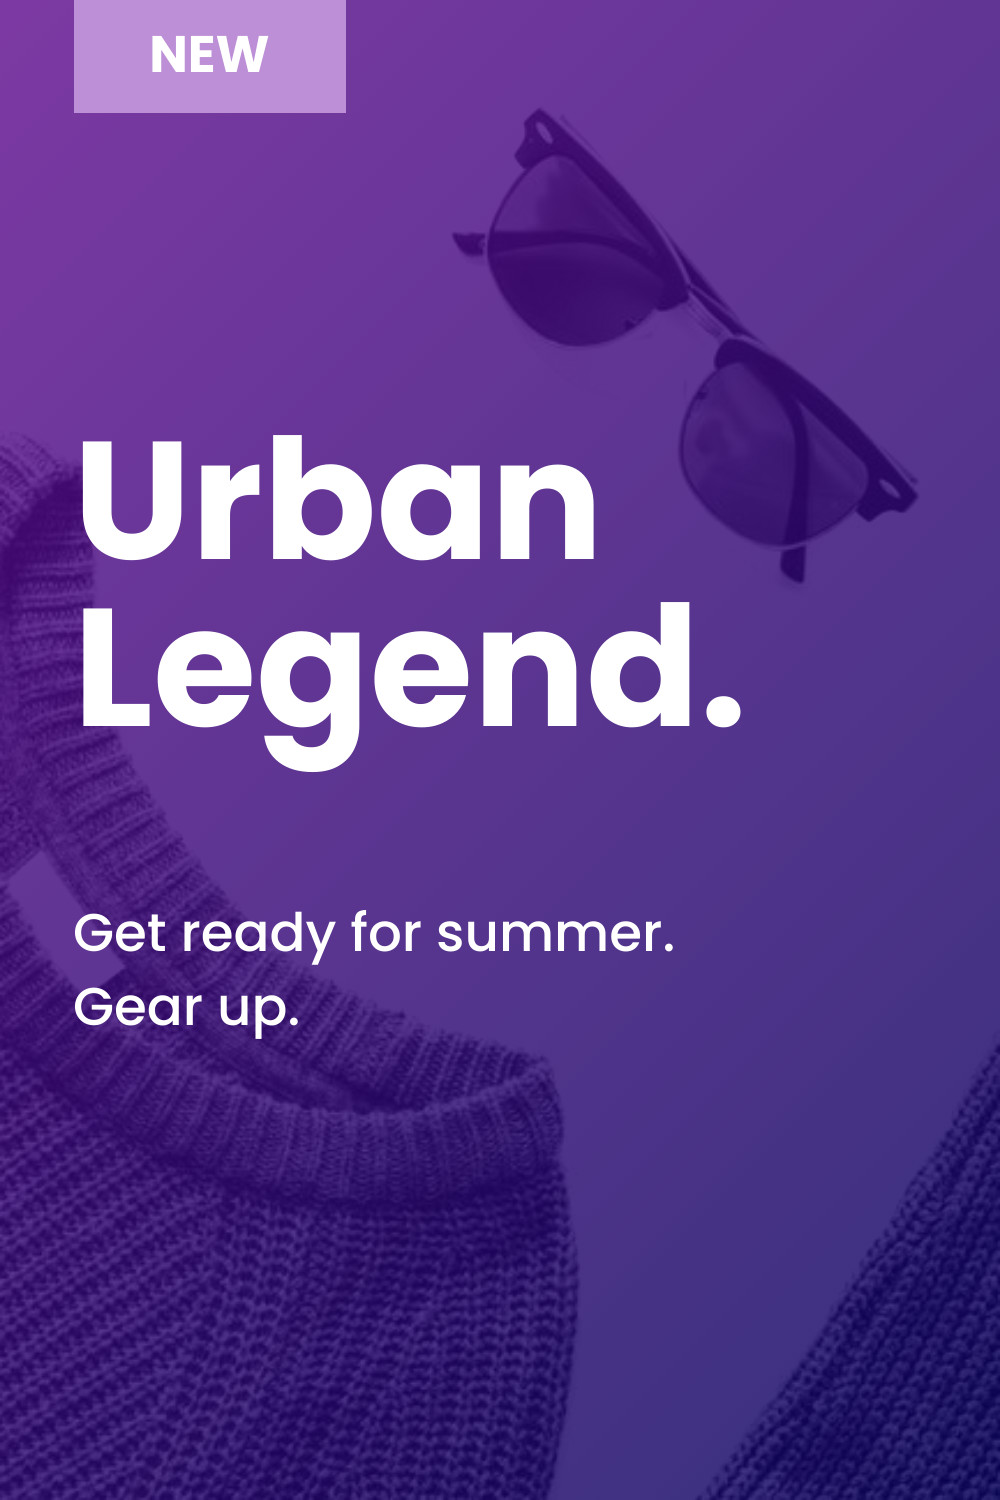 Urban Legend Gear Up